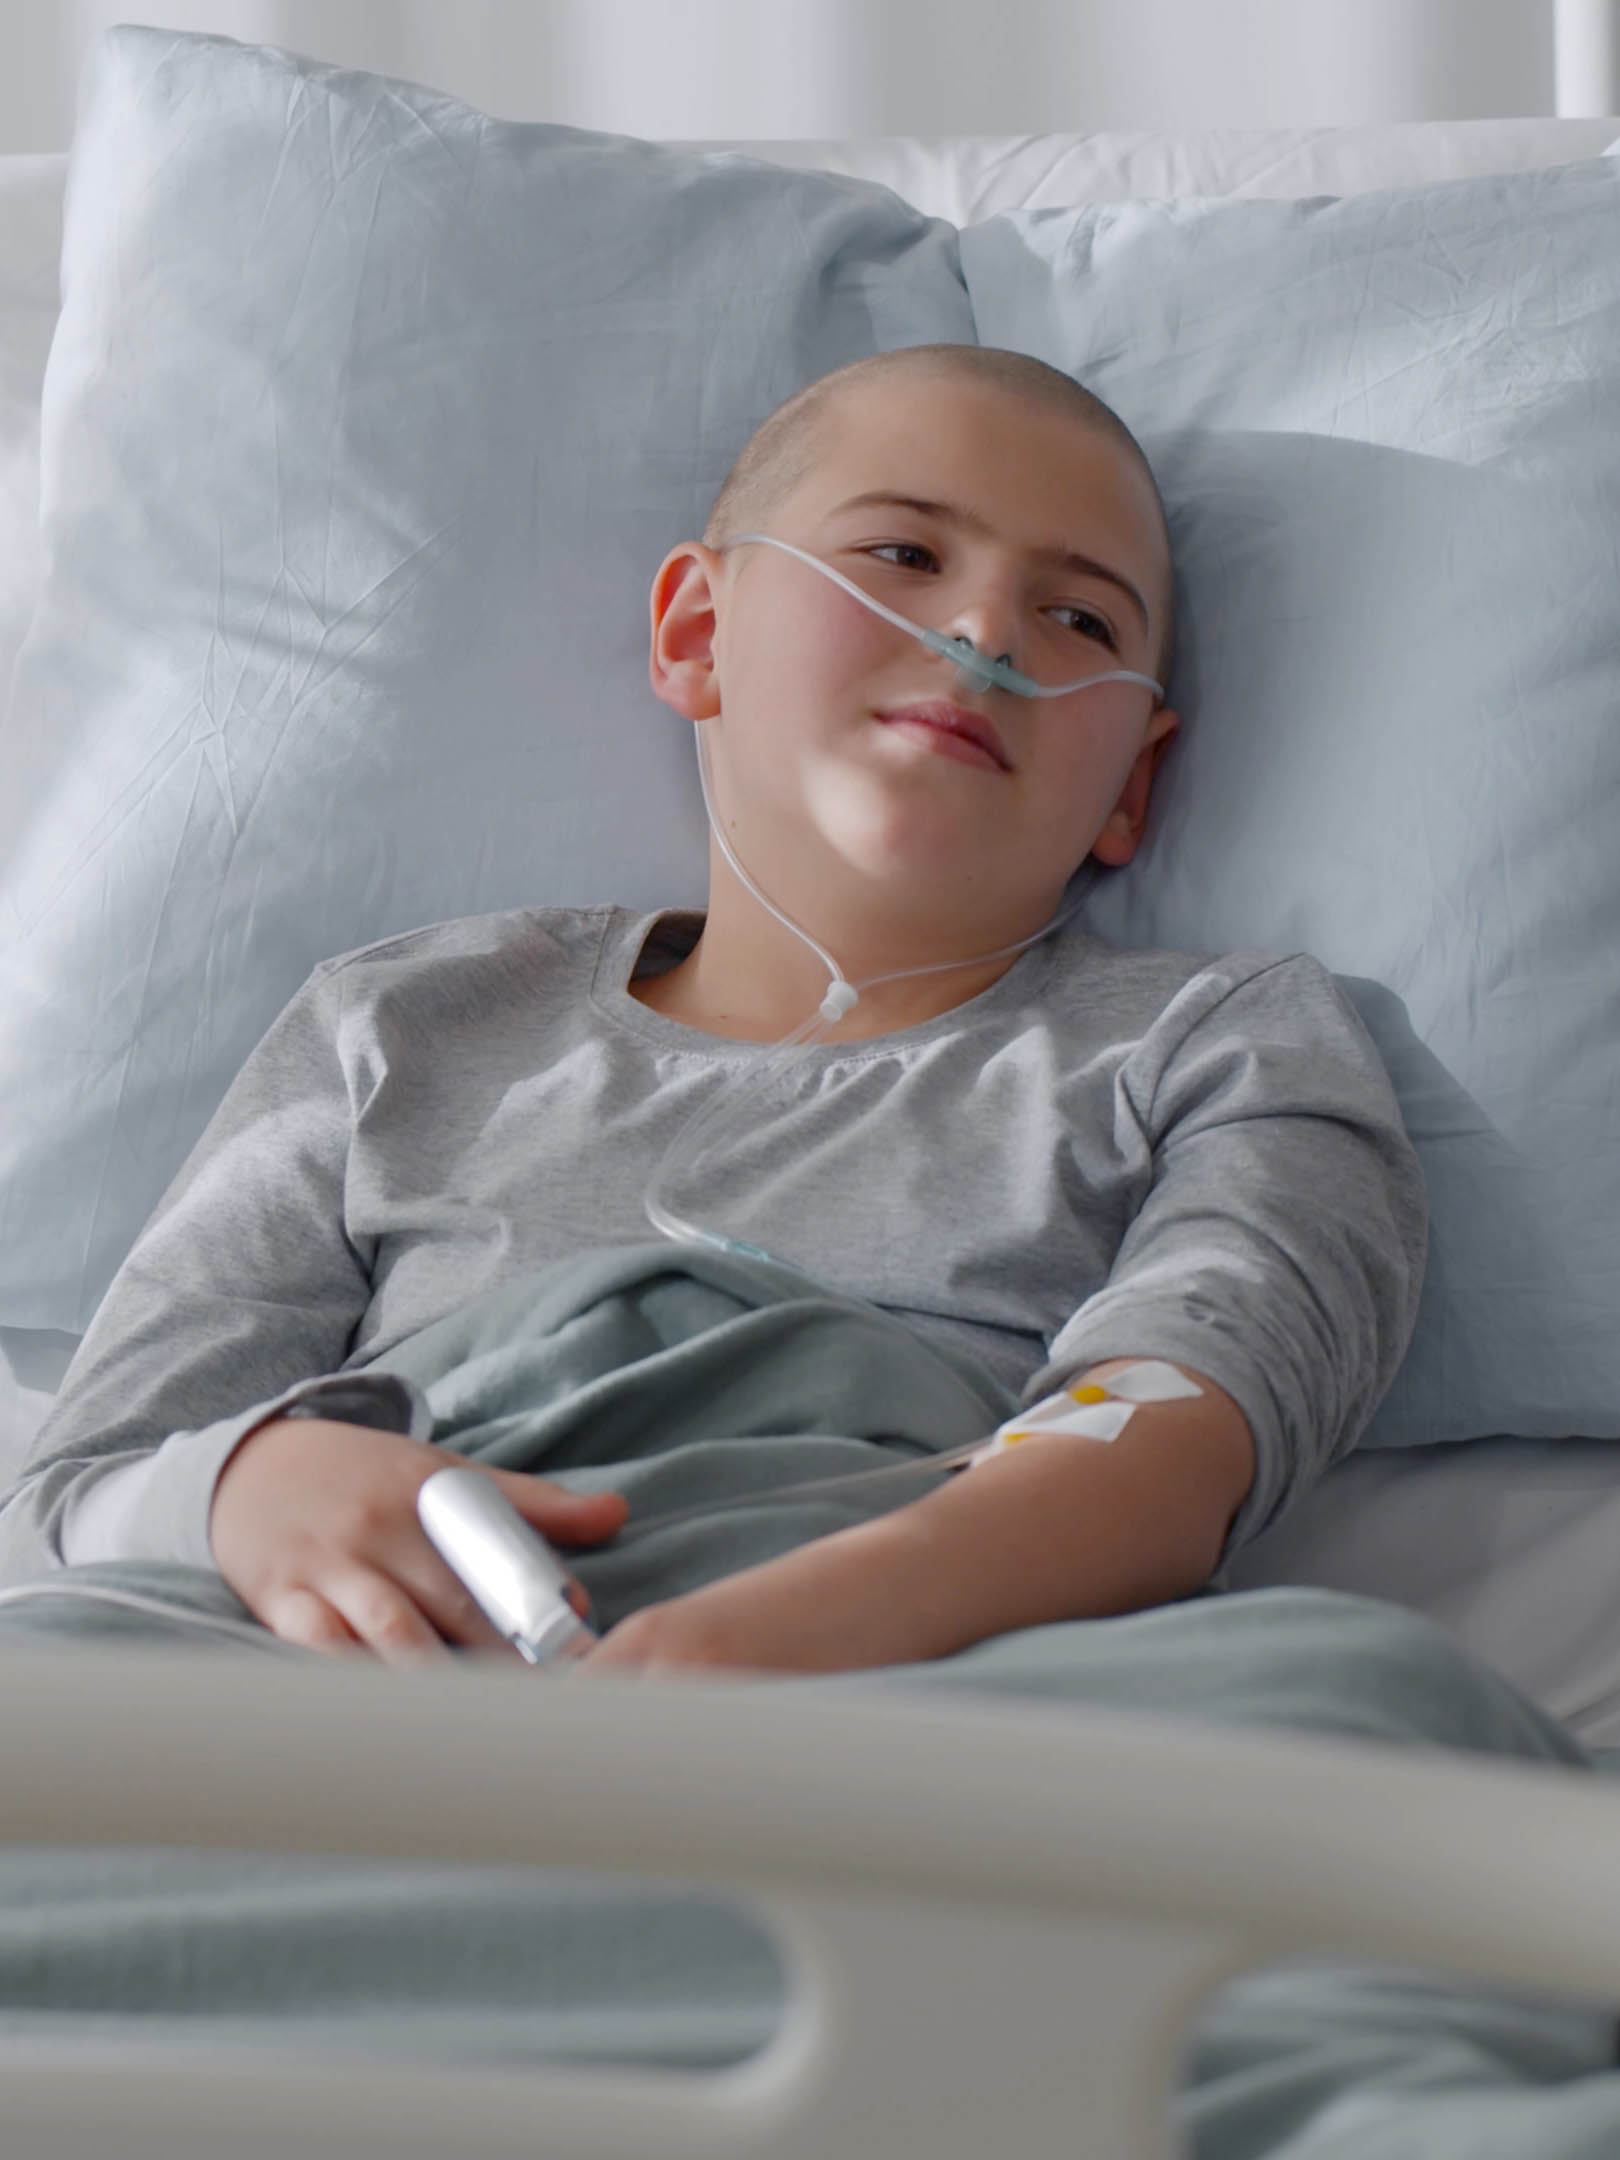 bald teen boy cancer patient lying in hospital ward